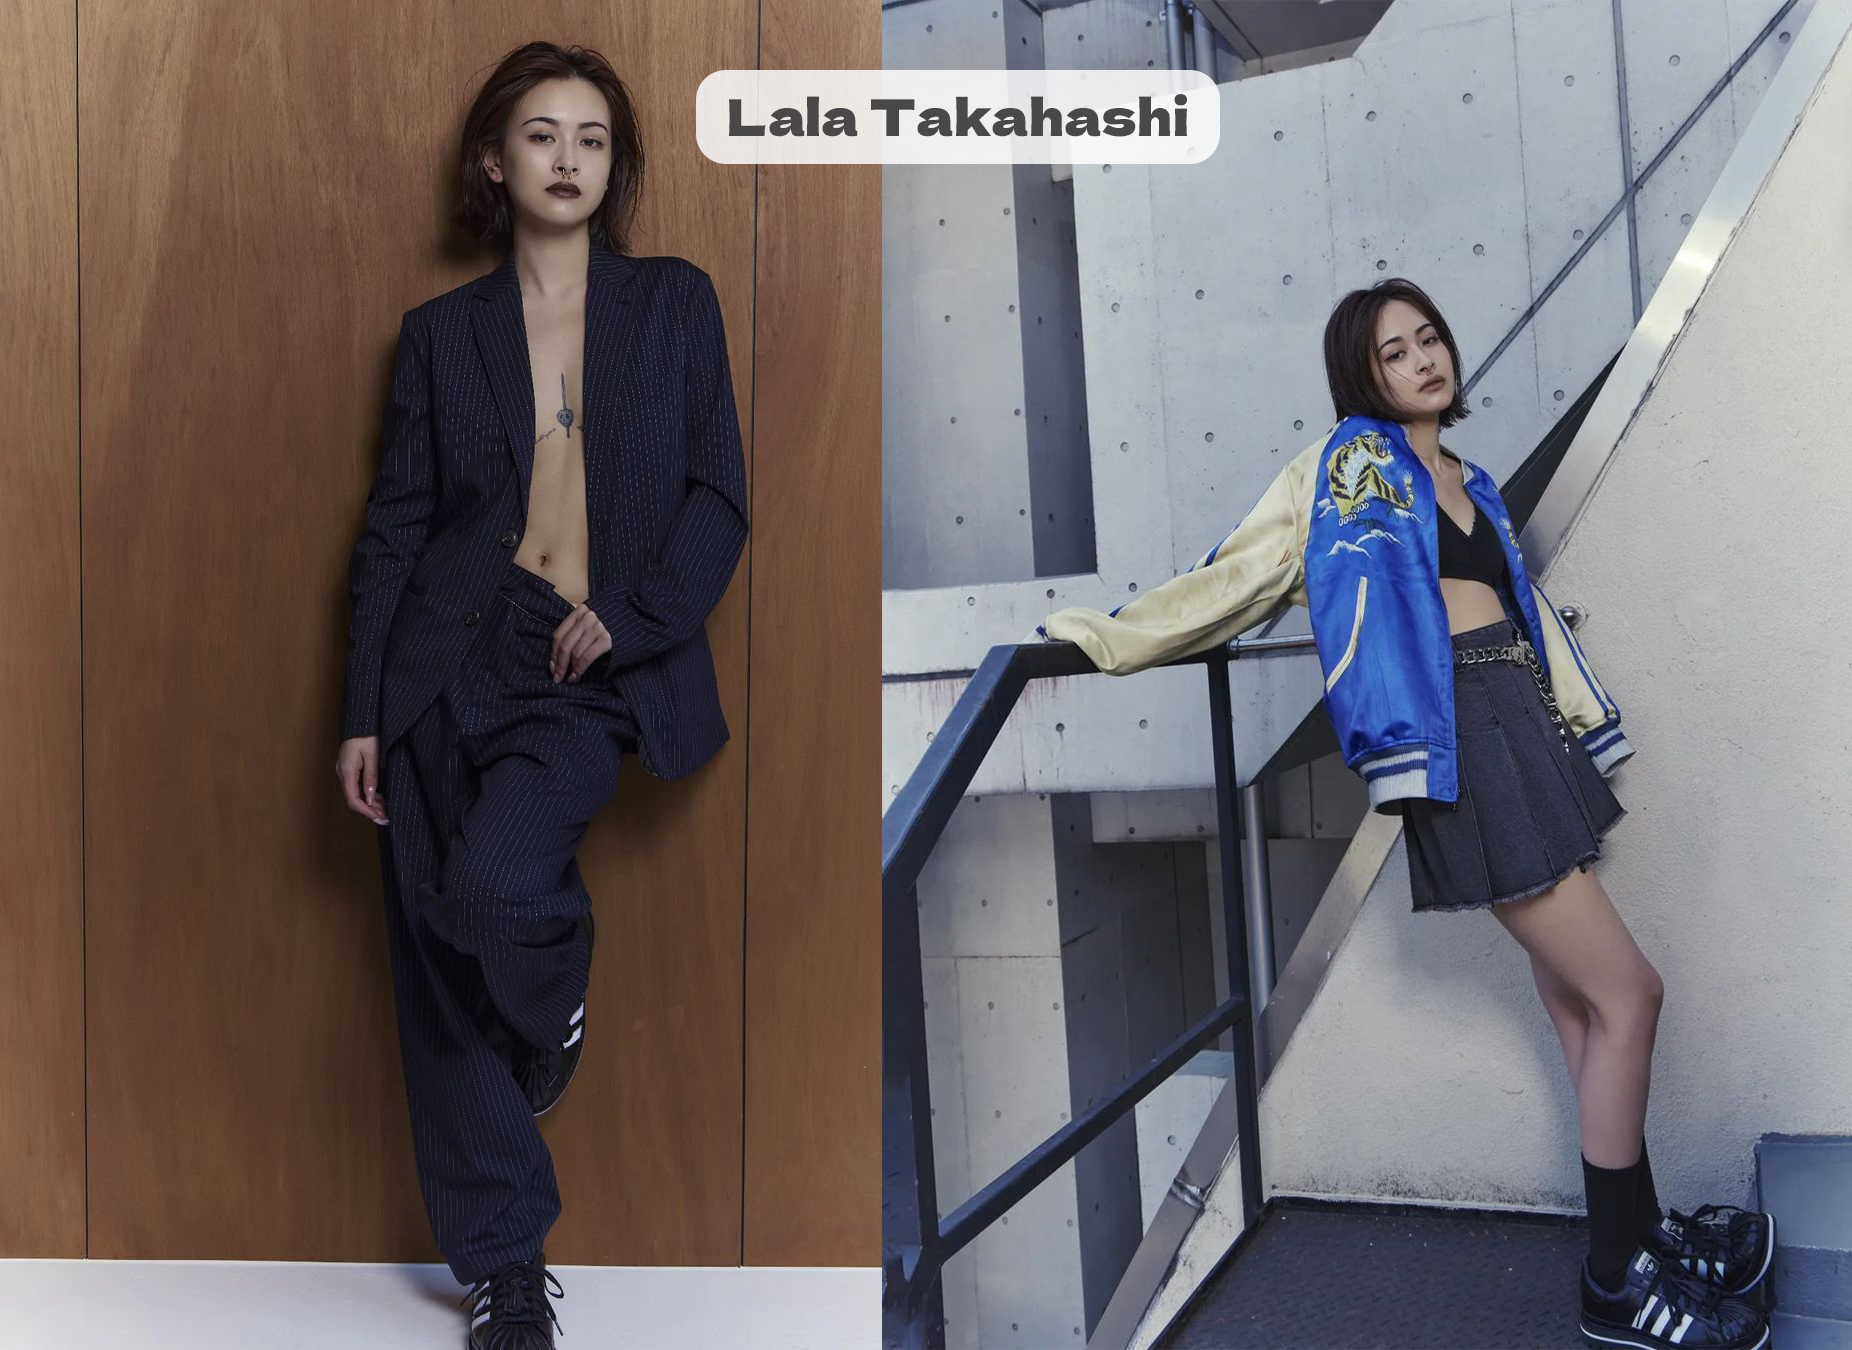 Lala Takahashi